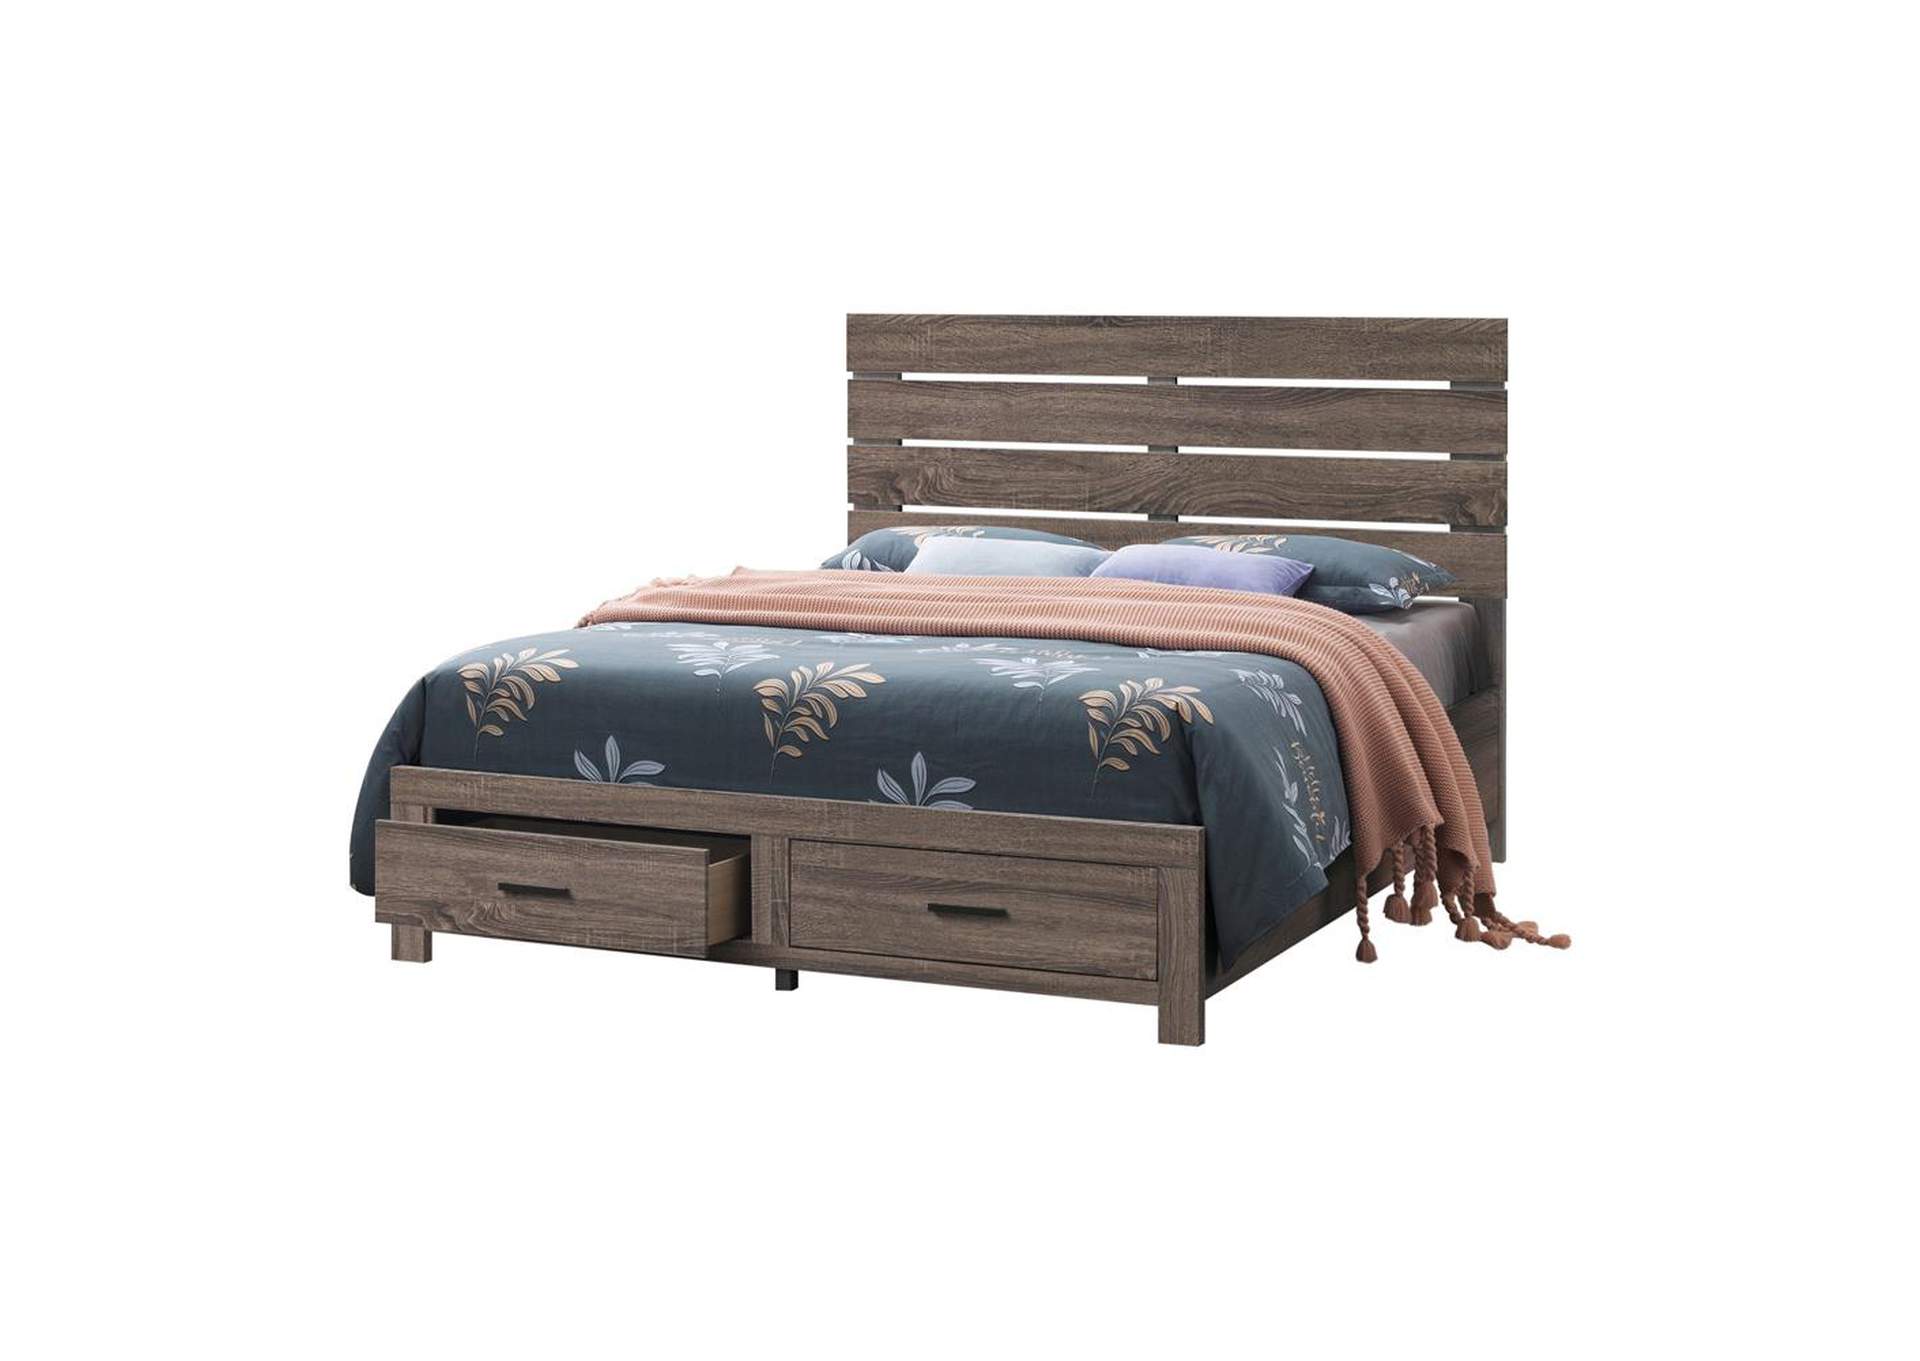 Eastern King Bed Best Furniture And, Eastern King Bed Frame Wood